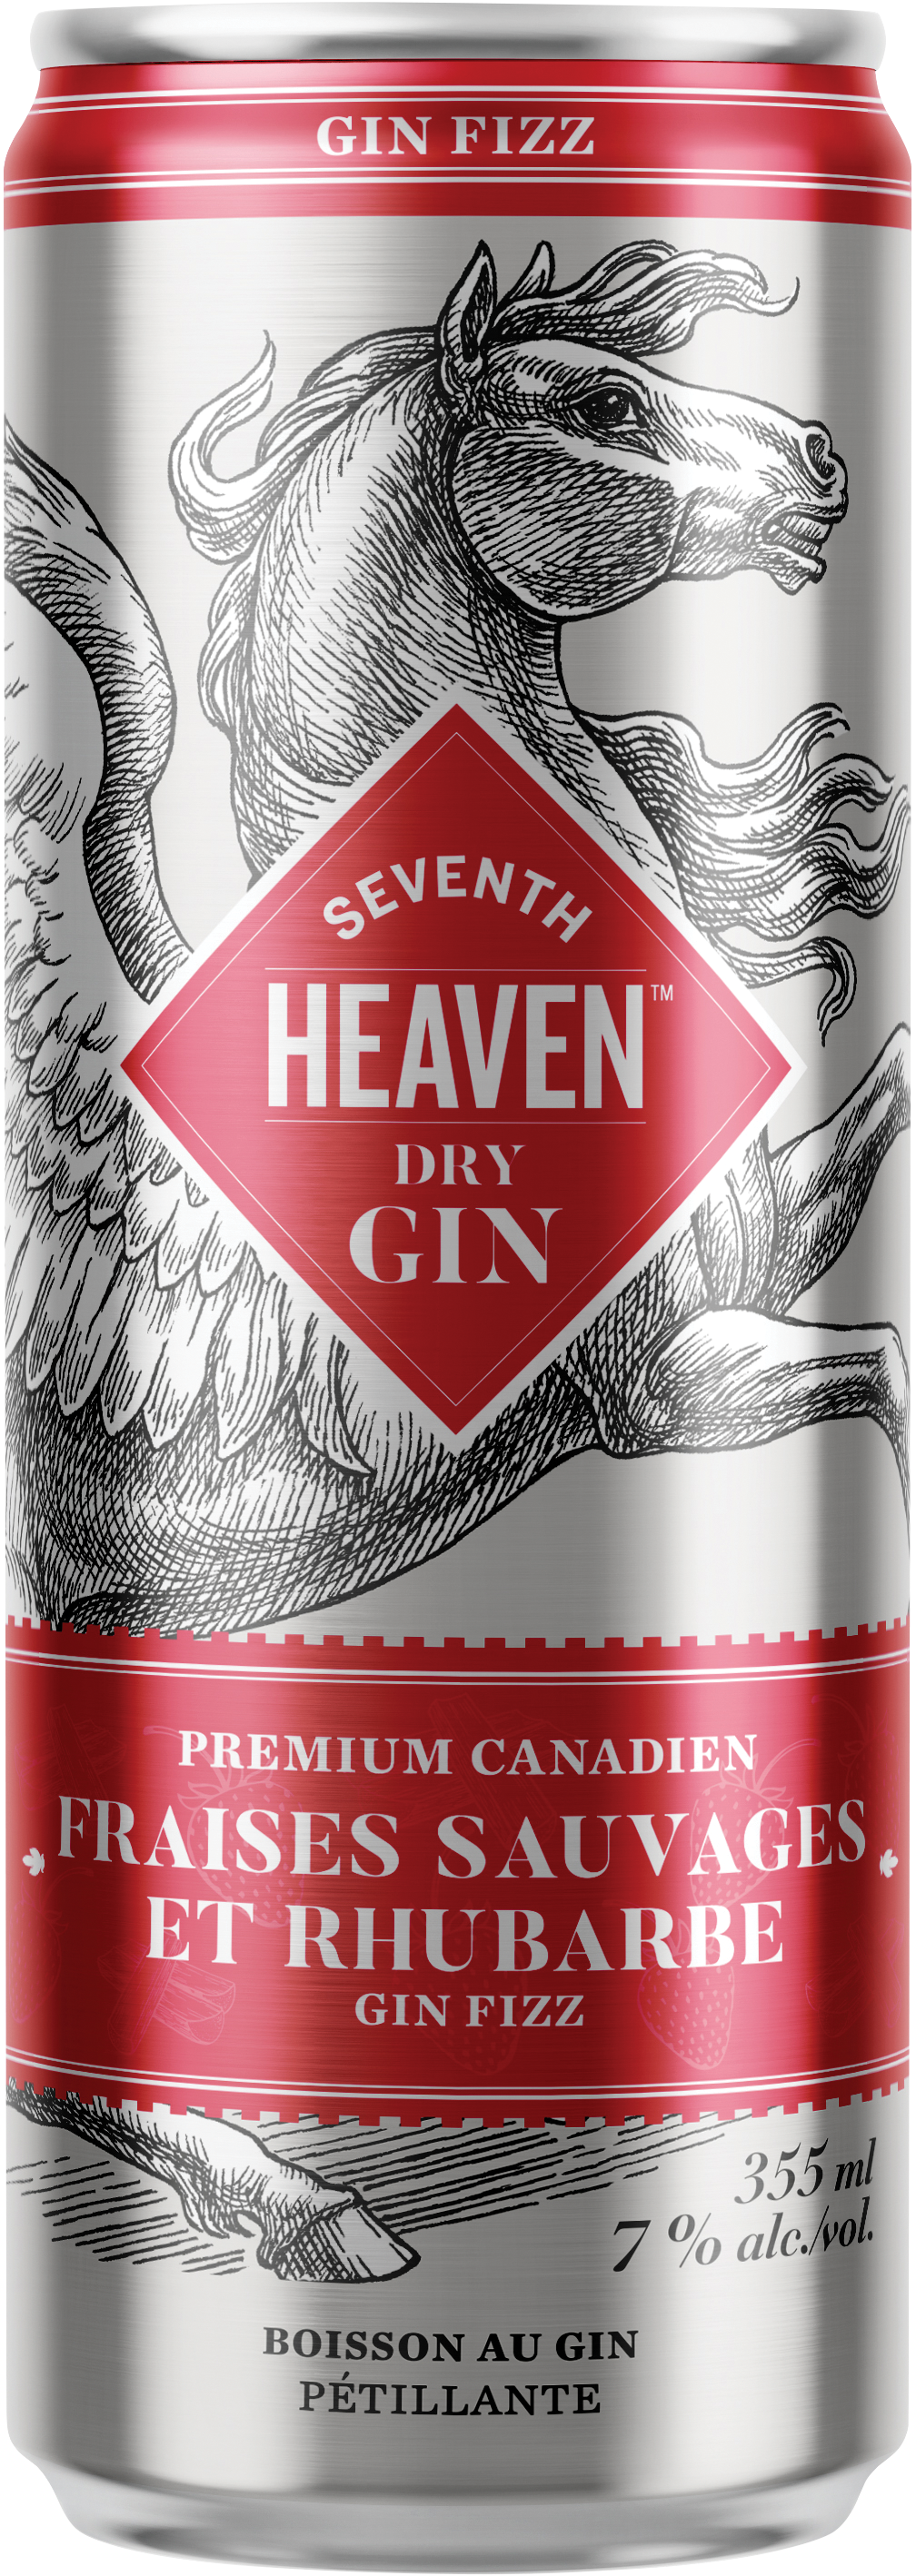 Seventh Heaven Gin Fizz Fraises sauvages et rhubarbe